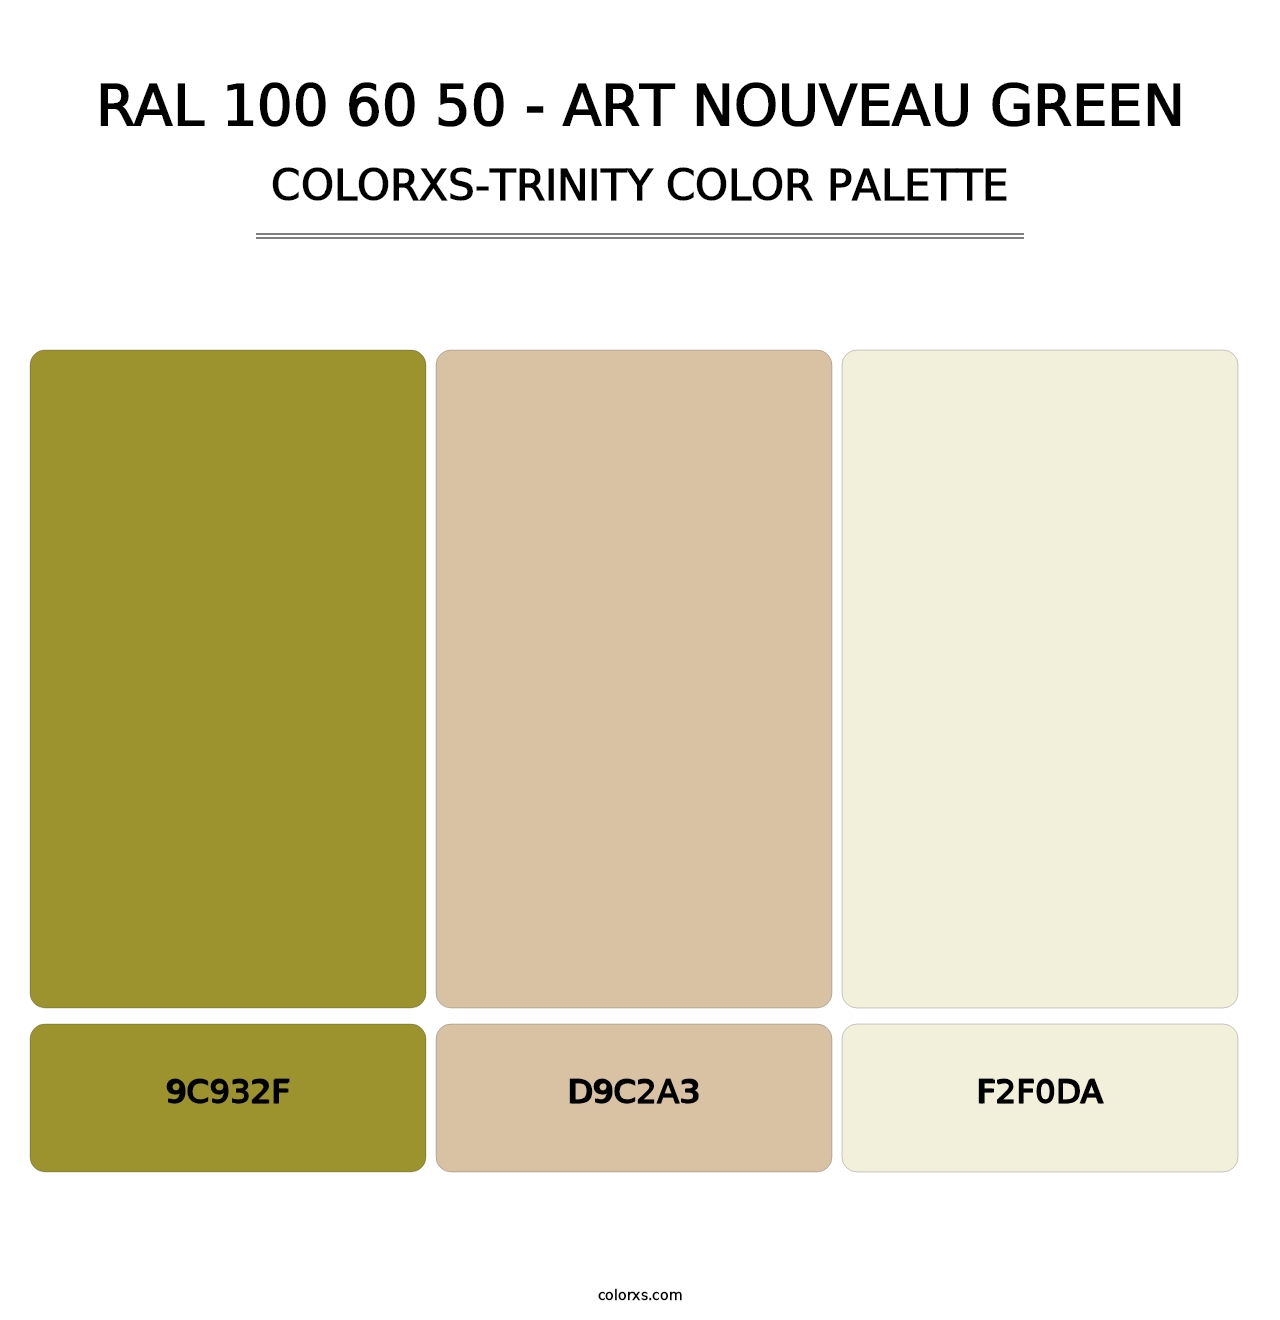 RAL 100 60 50 - Art Nouveau Green - Colorxs Trinity Palette